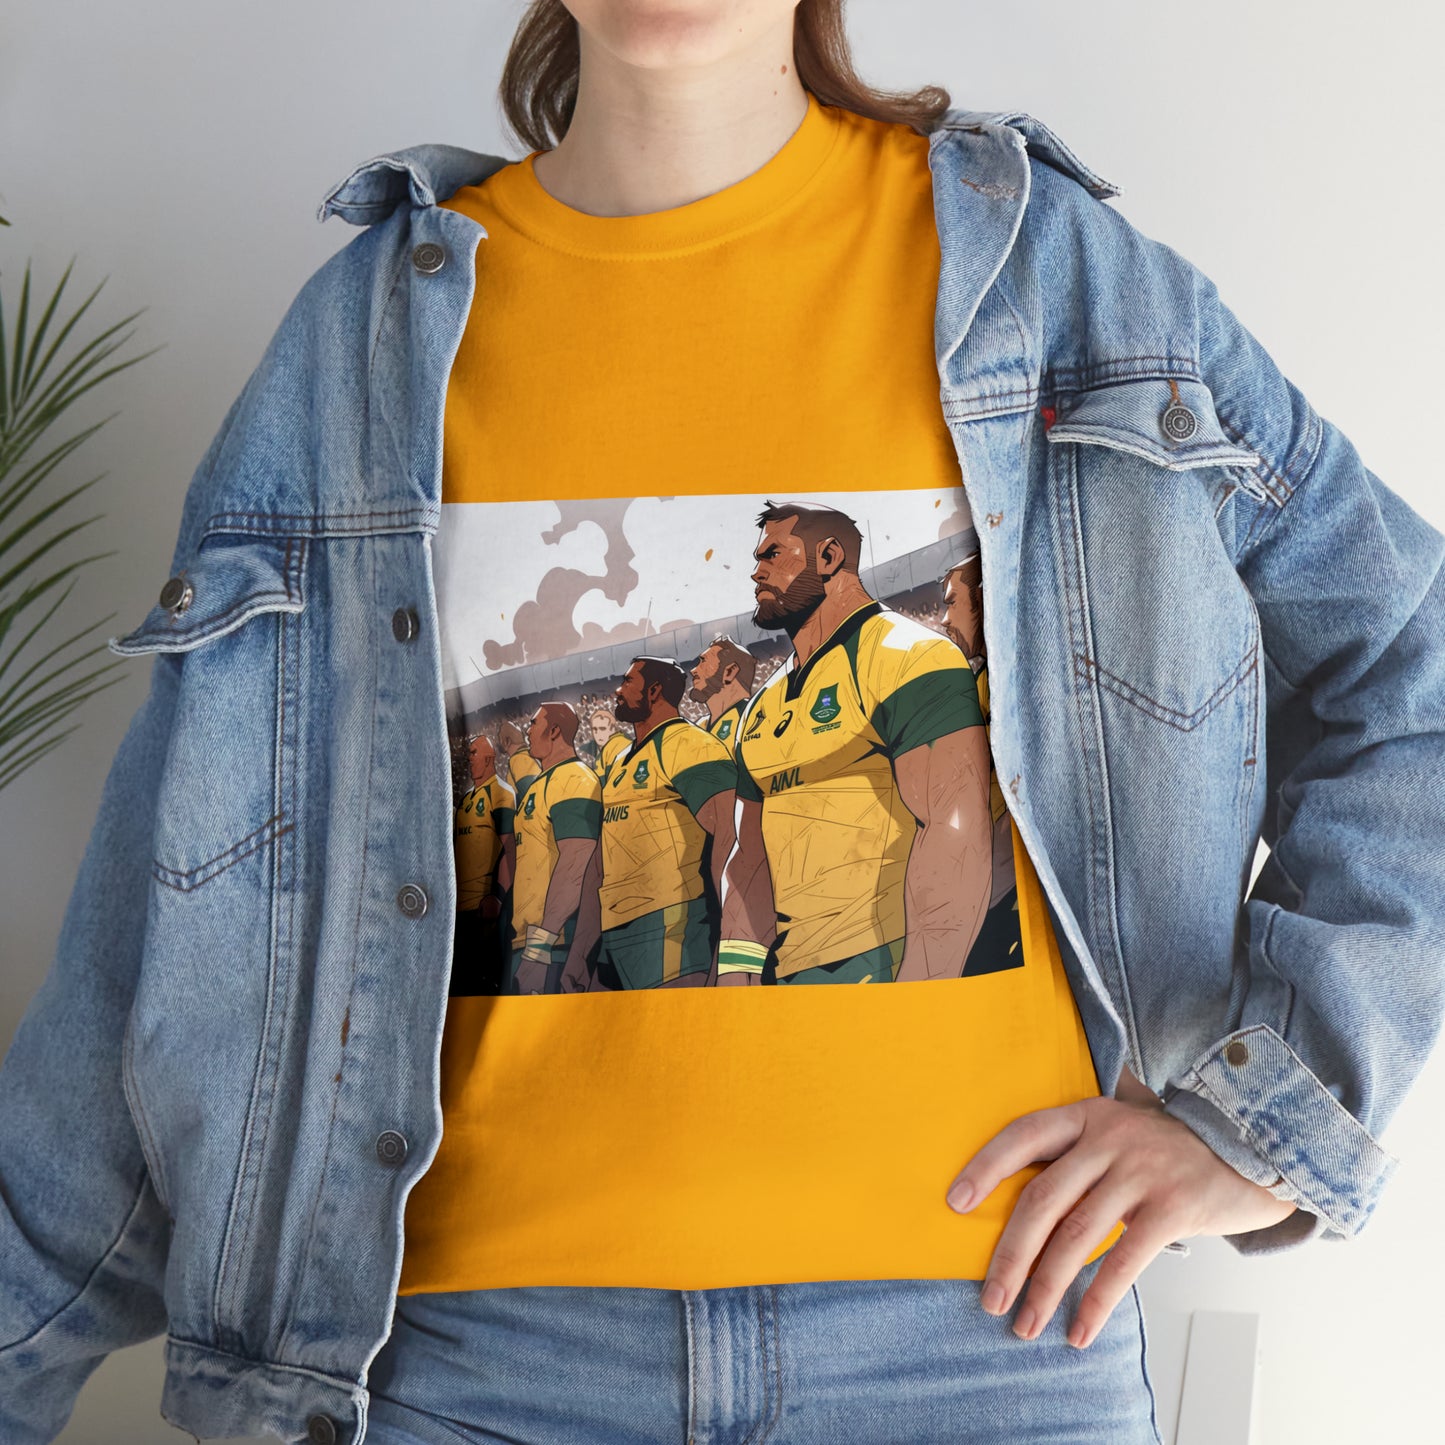 Ready Australia - light shirts